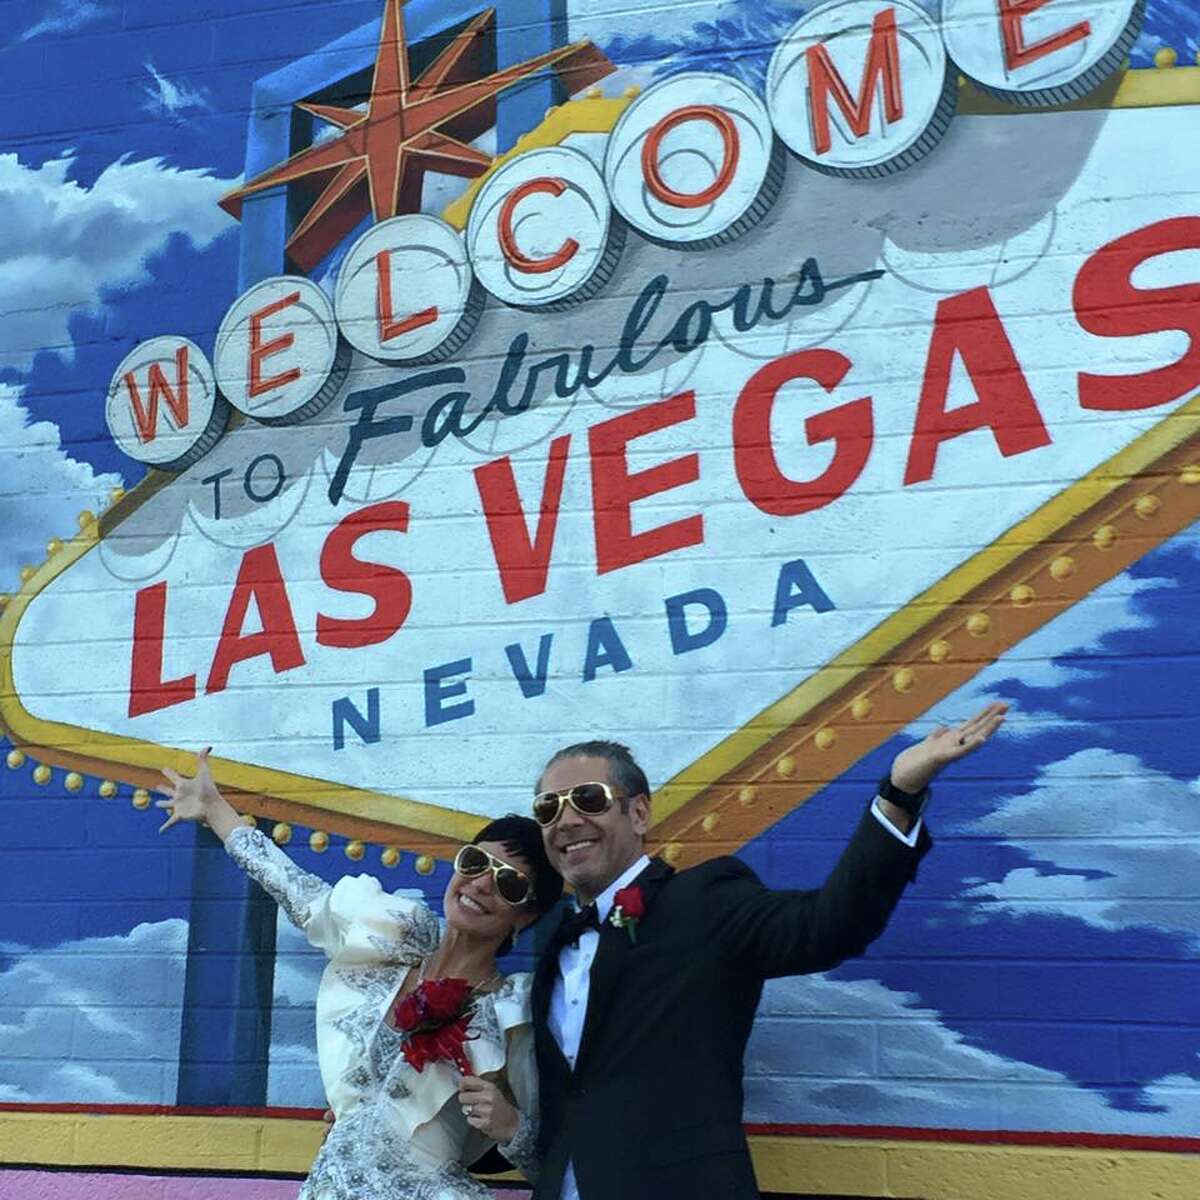 Arthur & Nicole Langham Hochzeitstag: 27. Februar 2015 Veranstaltungsort: Graceland Wedding Chapel, Las Vegas, NV